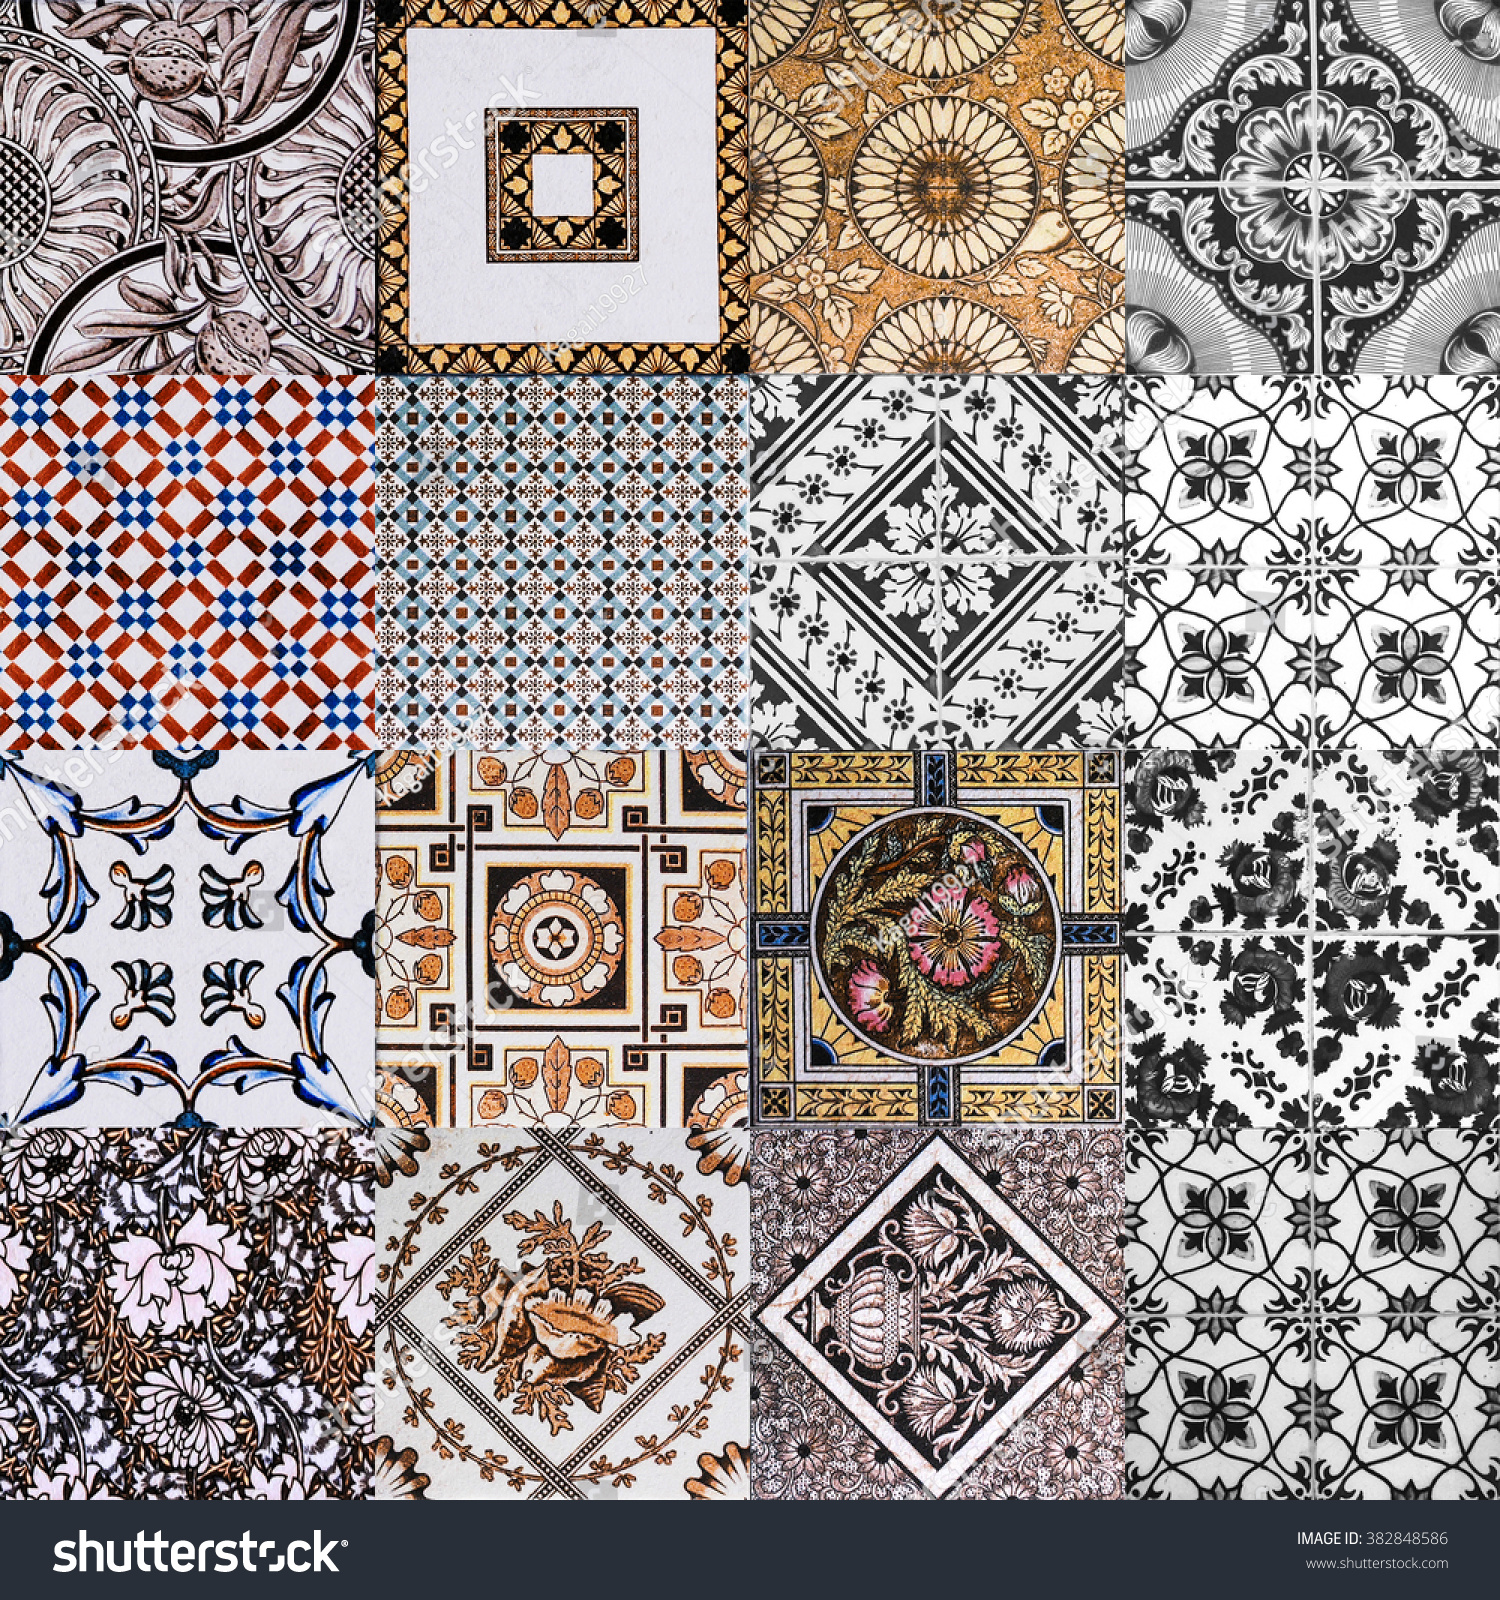 Ceramic Tile Texture Design Wall Bathroom Stock Photo Edit Now 382848586